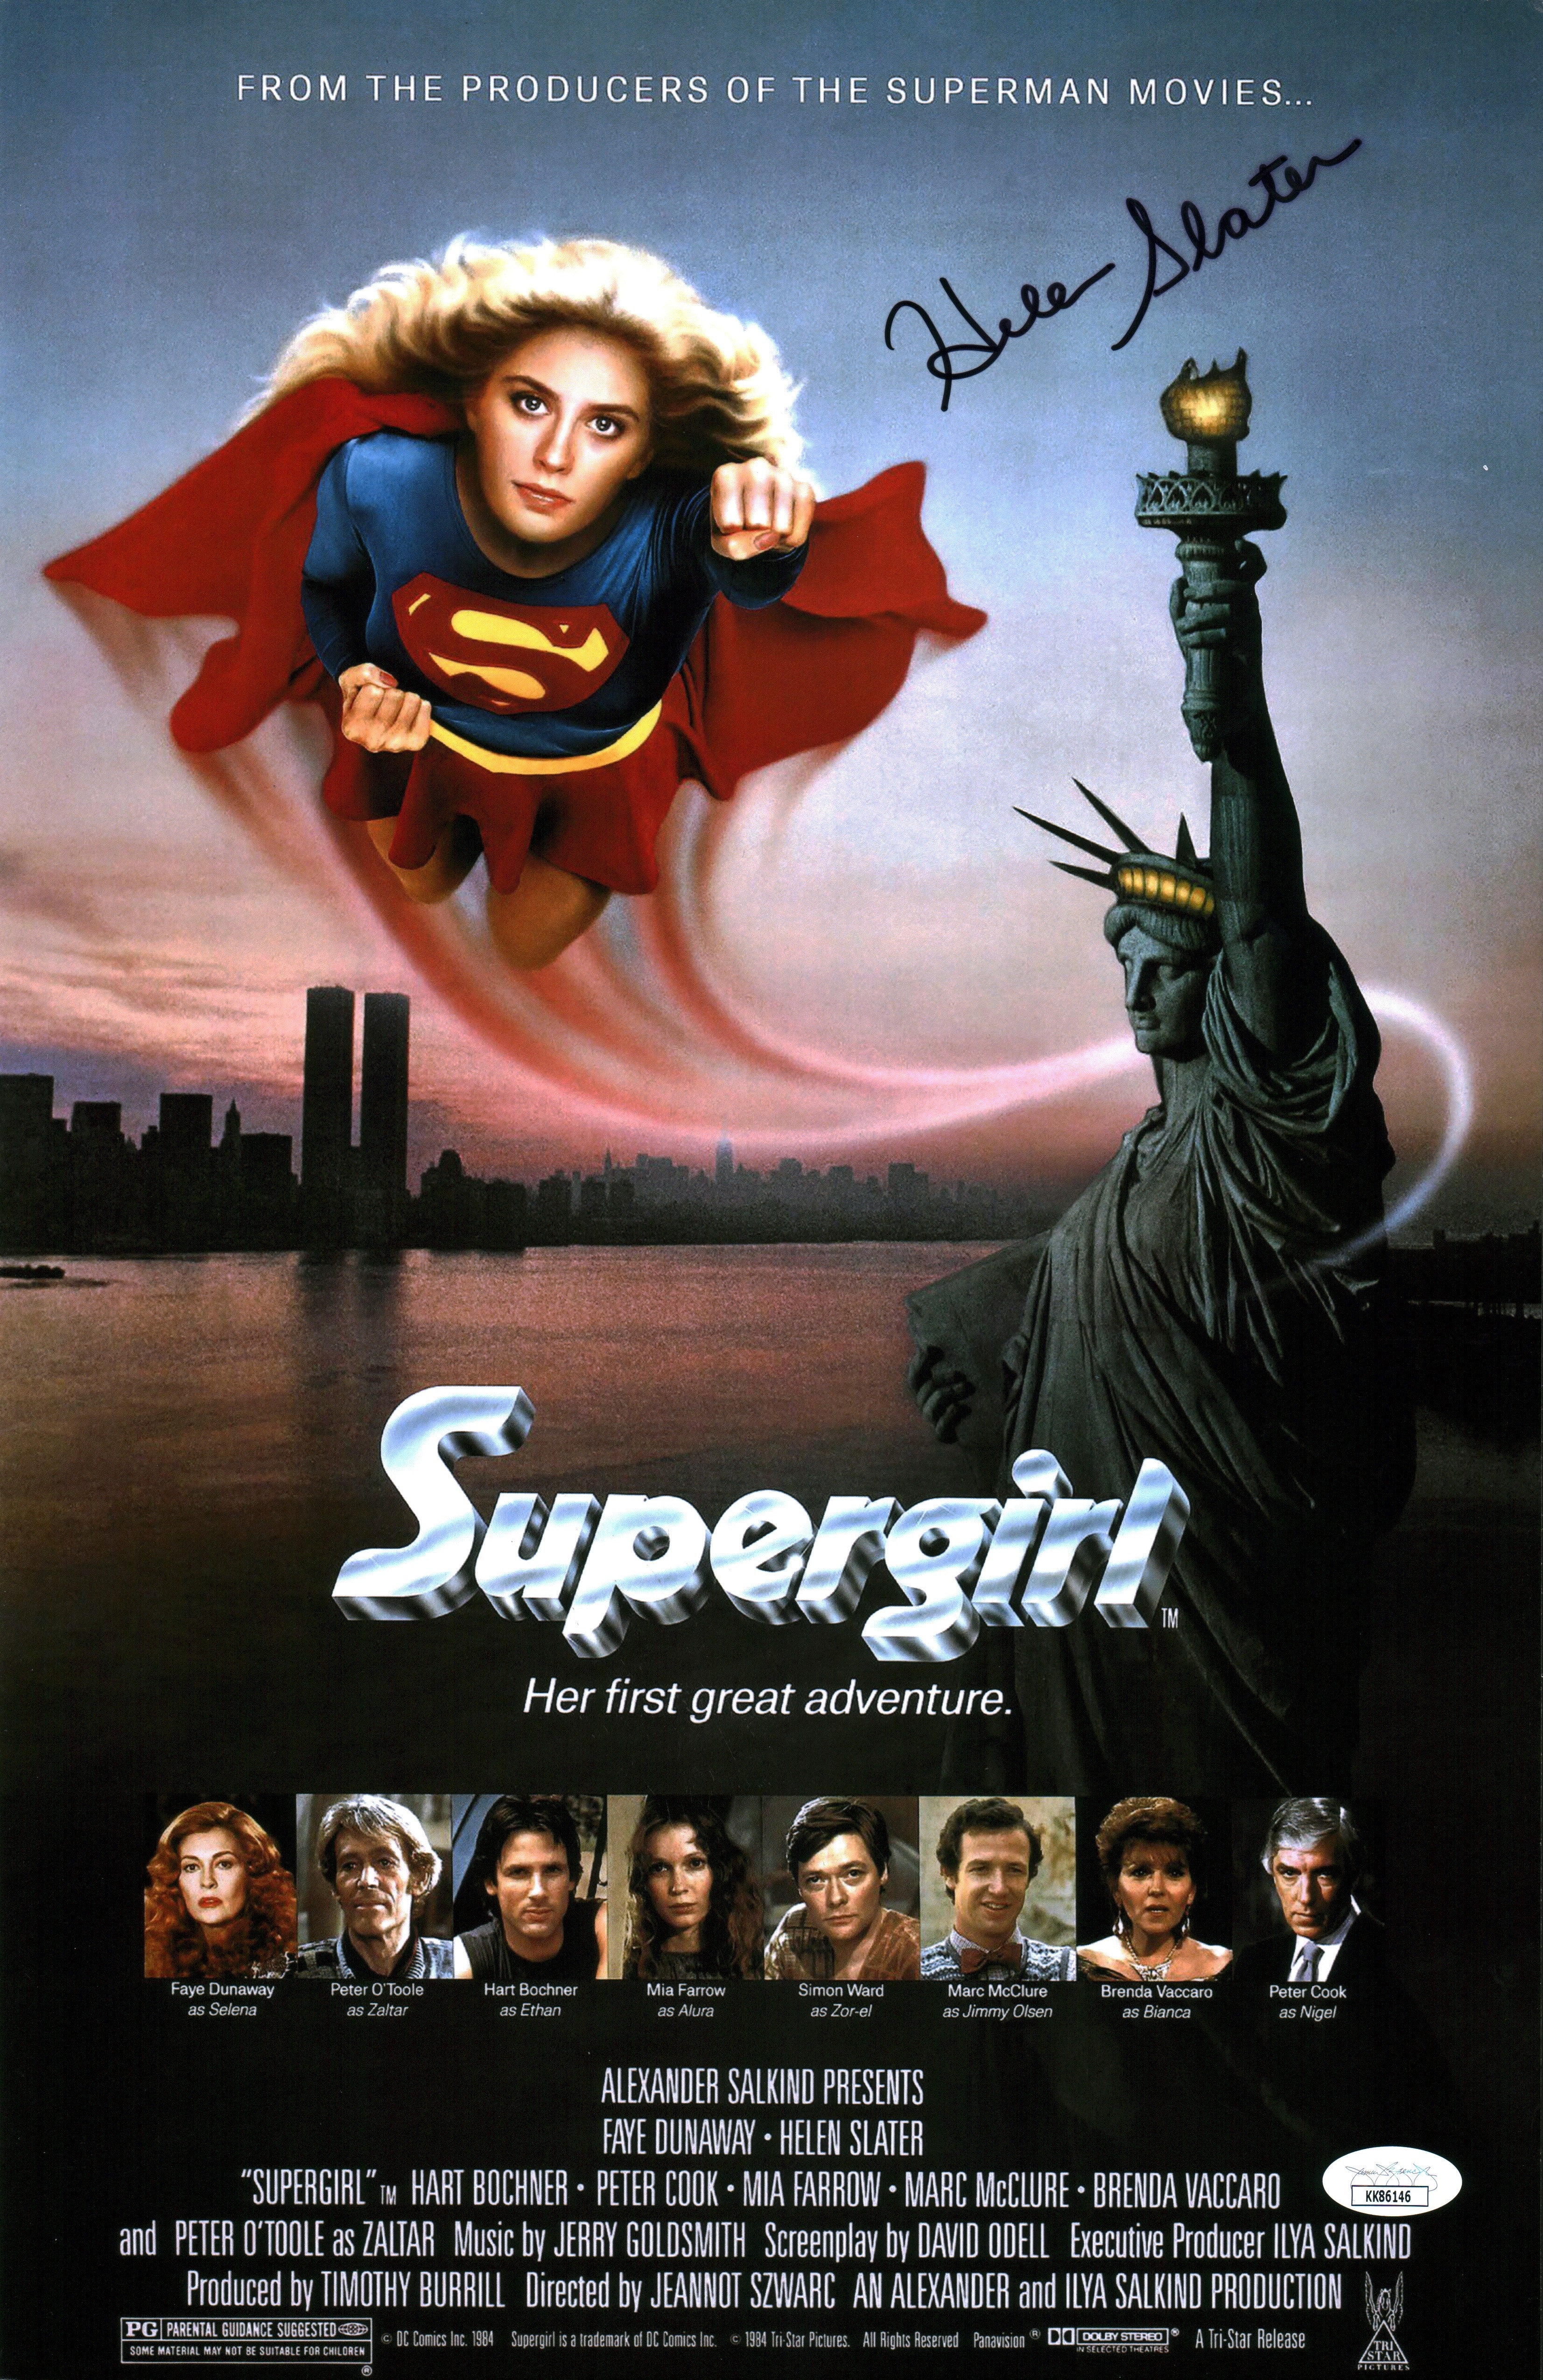 Helen Slater Supergirl 11x17 Signed Mini Poster JSA Certified Autograph